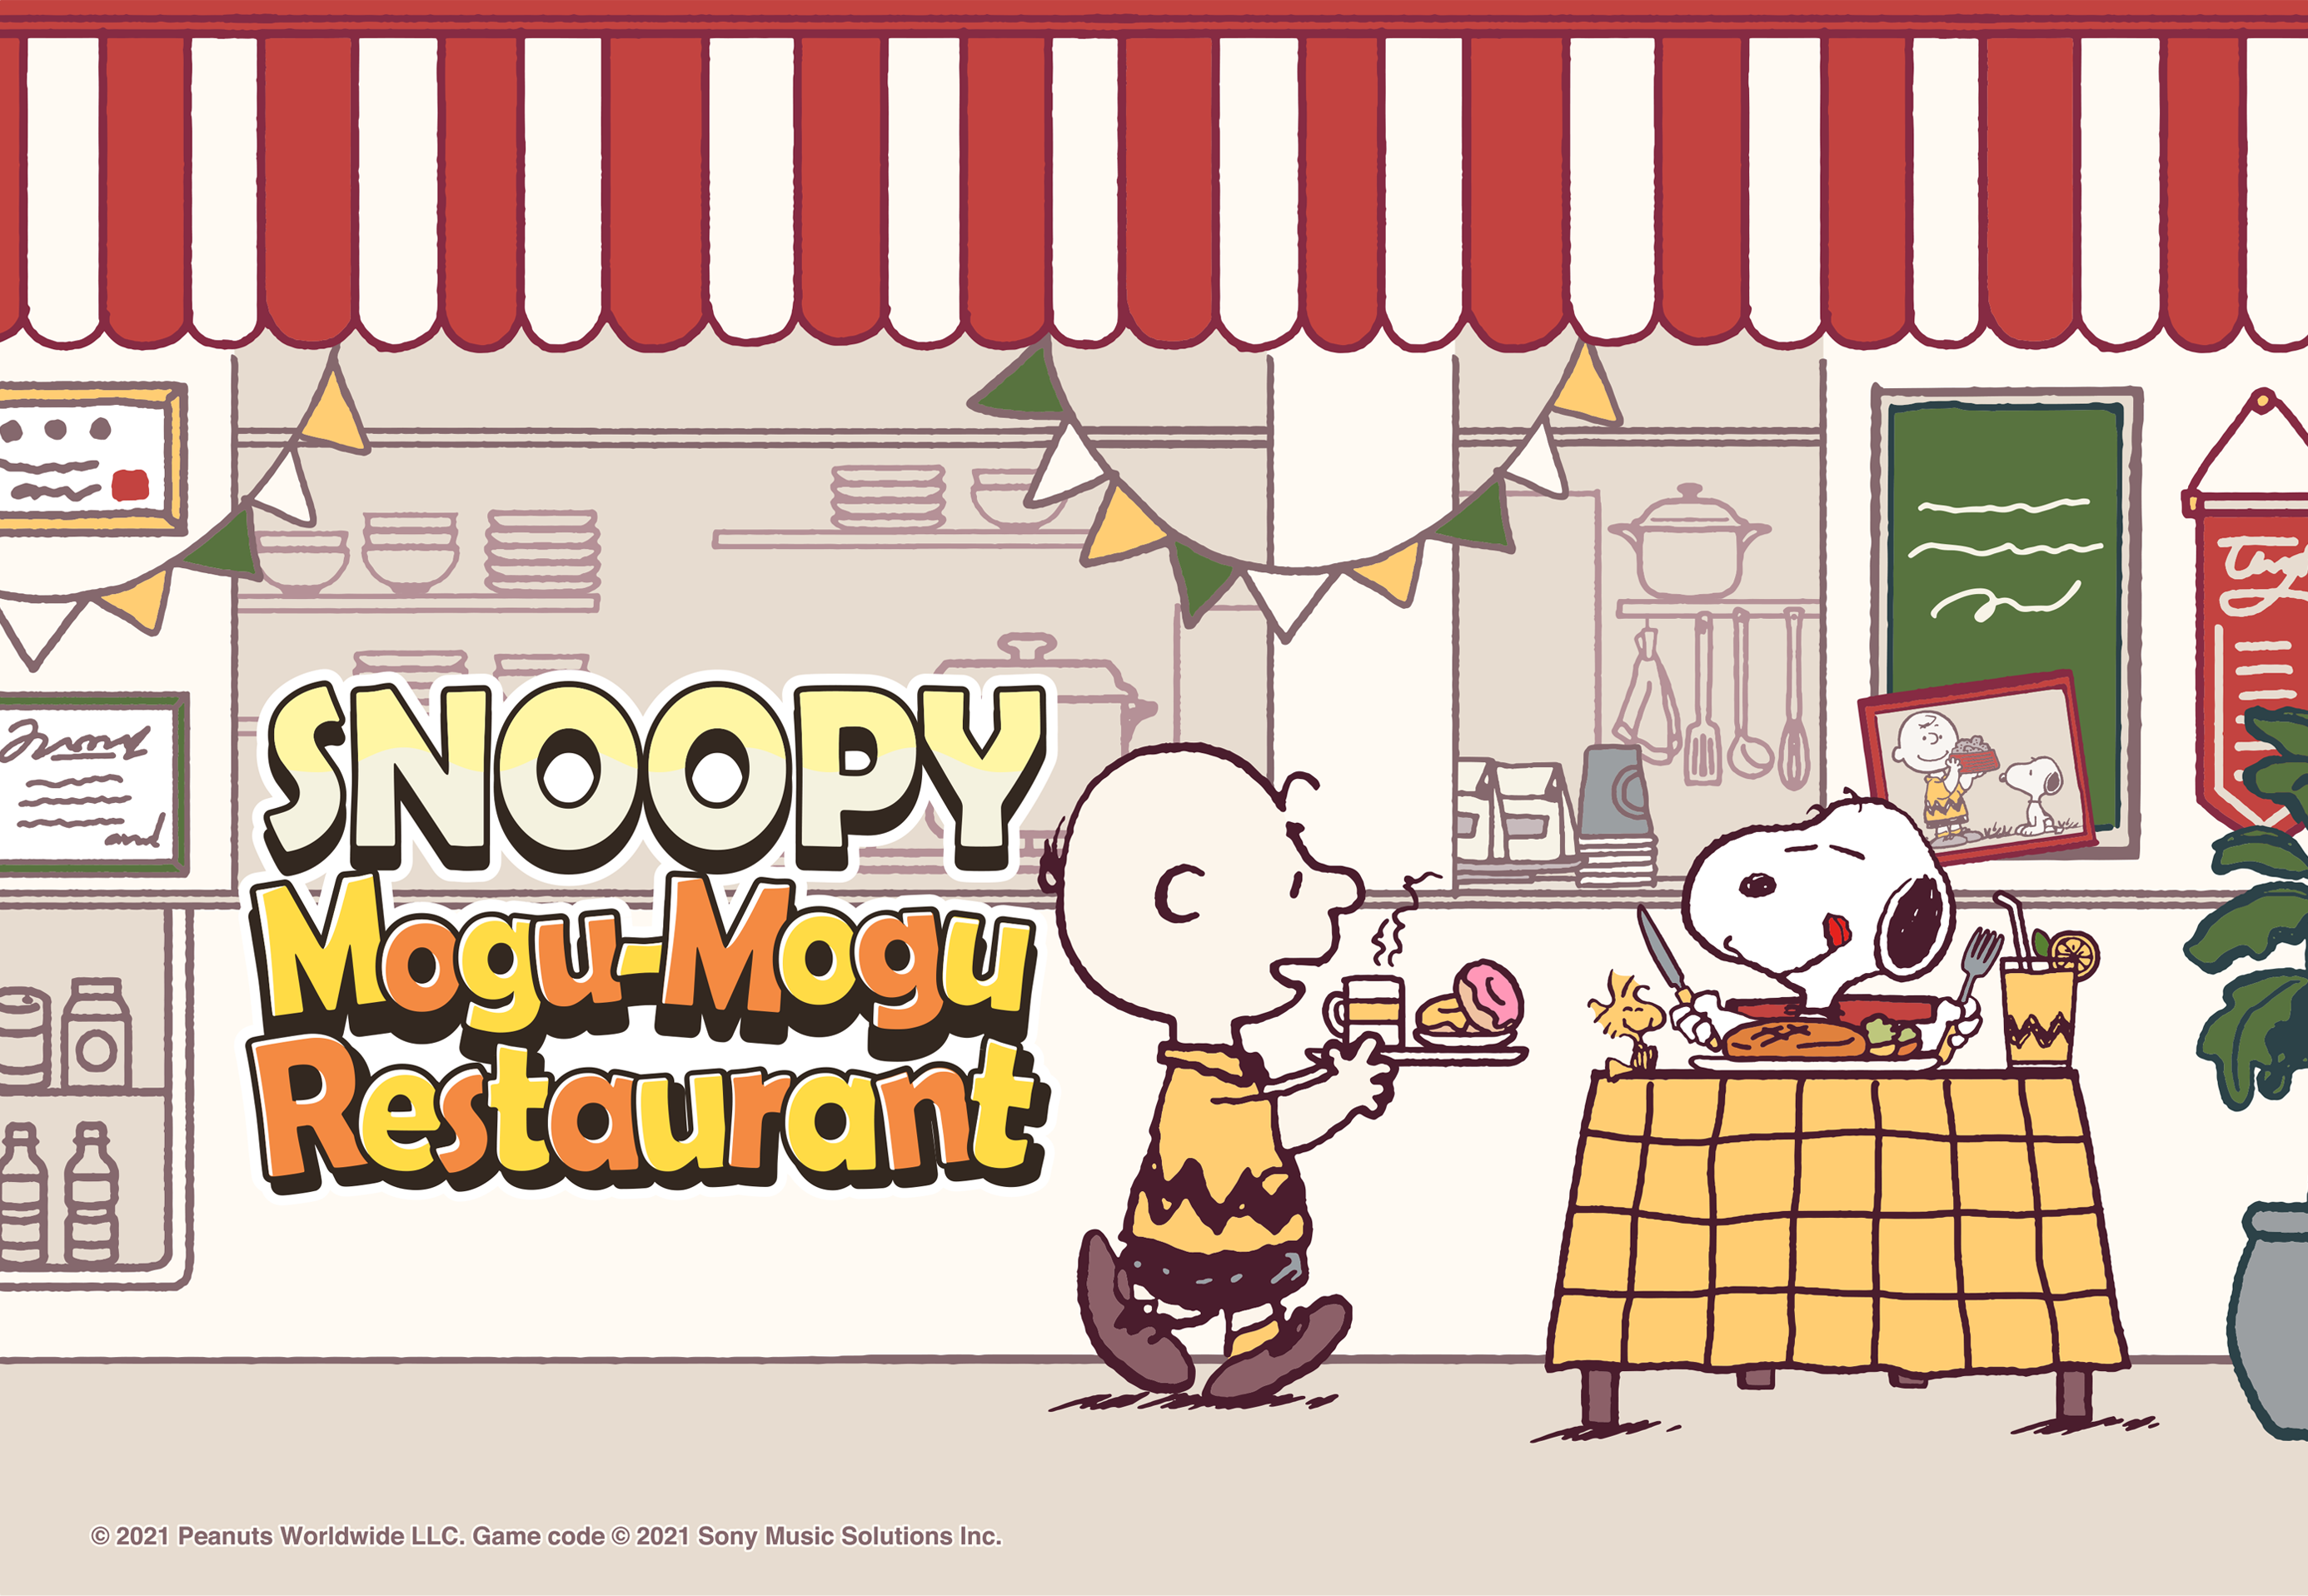 G2 Studiosが制作協力をした 「SNOOPY Mogu-Mogu Restaurant」のリリースが決定